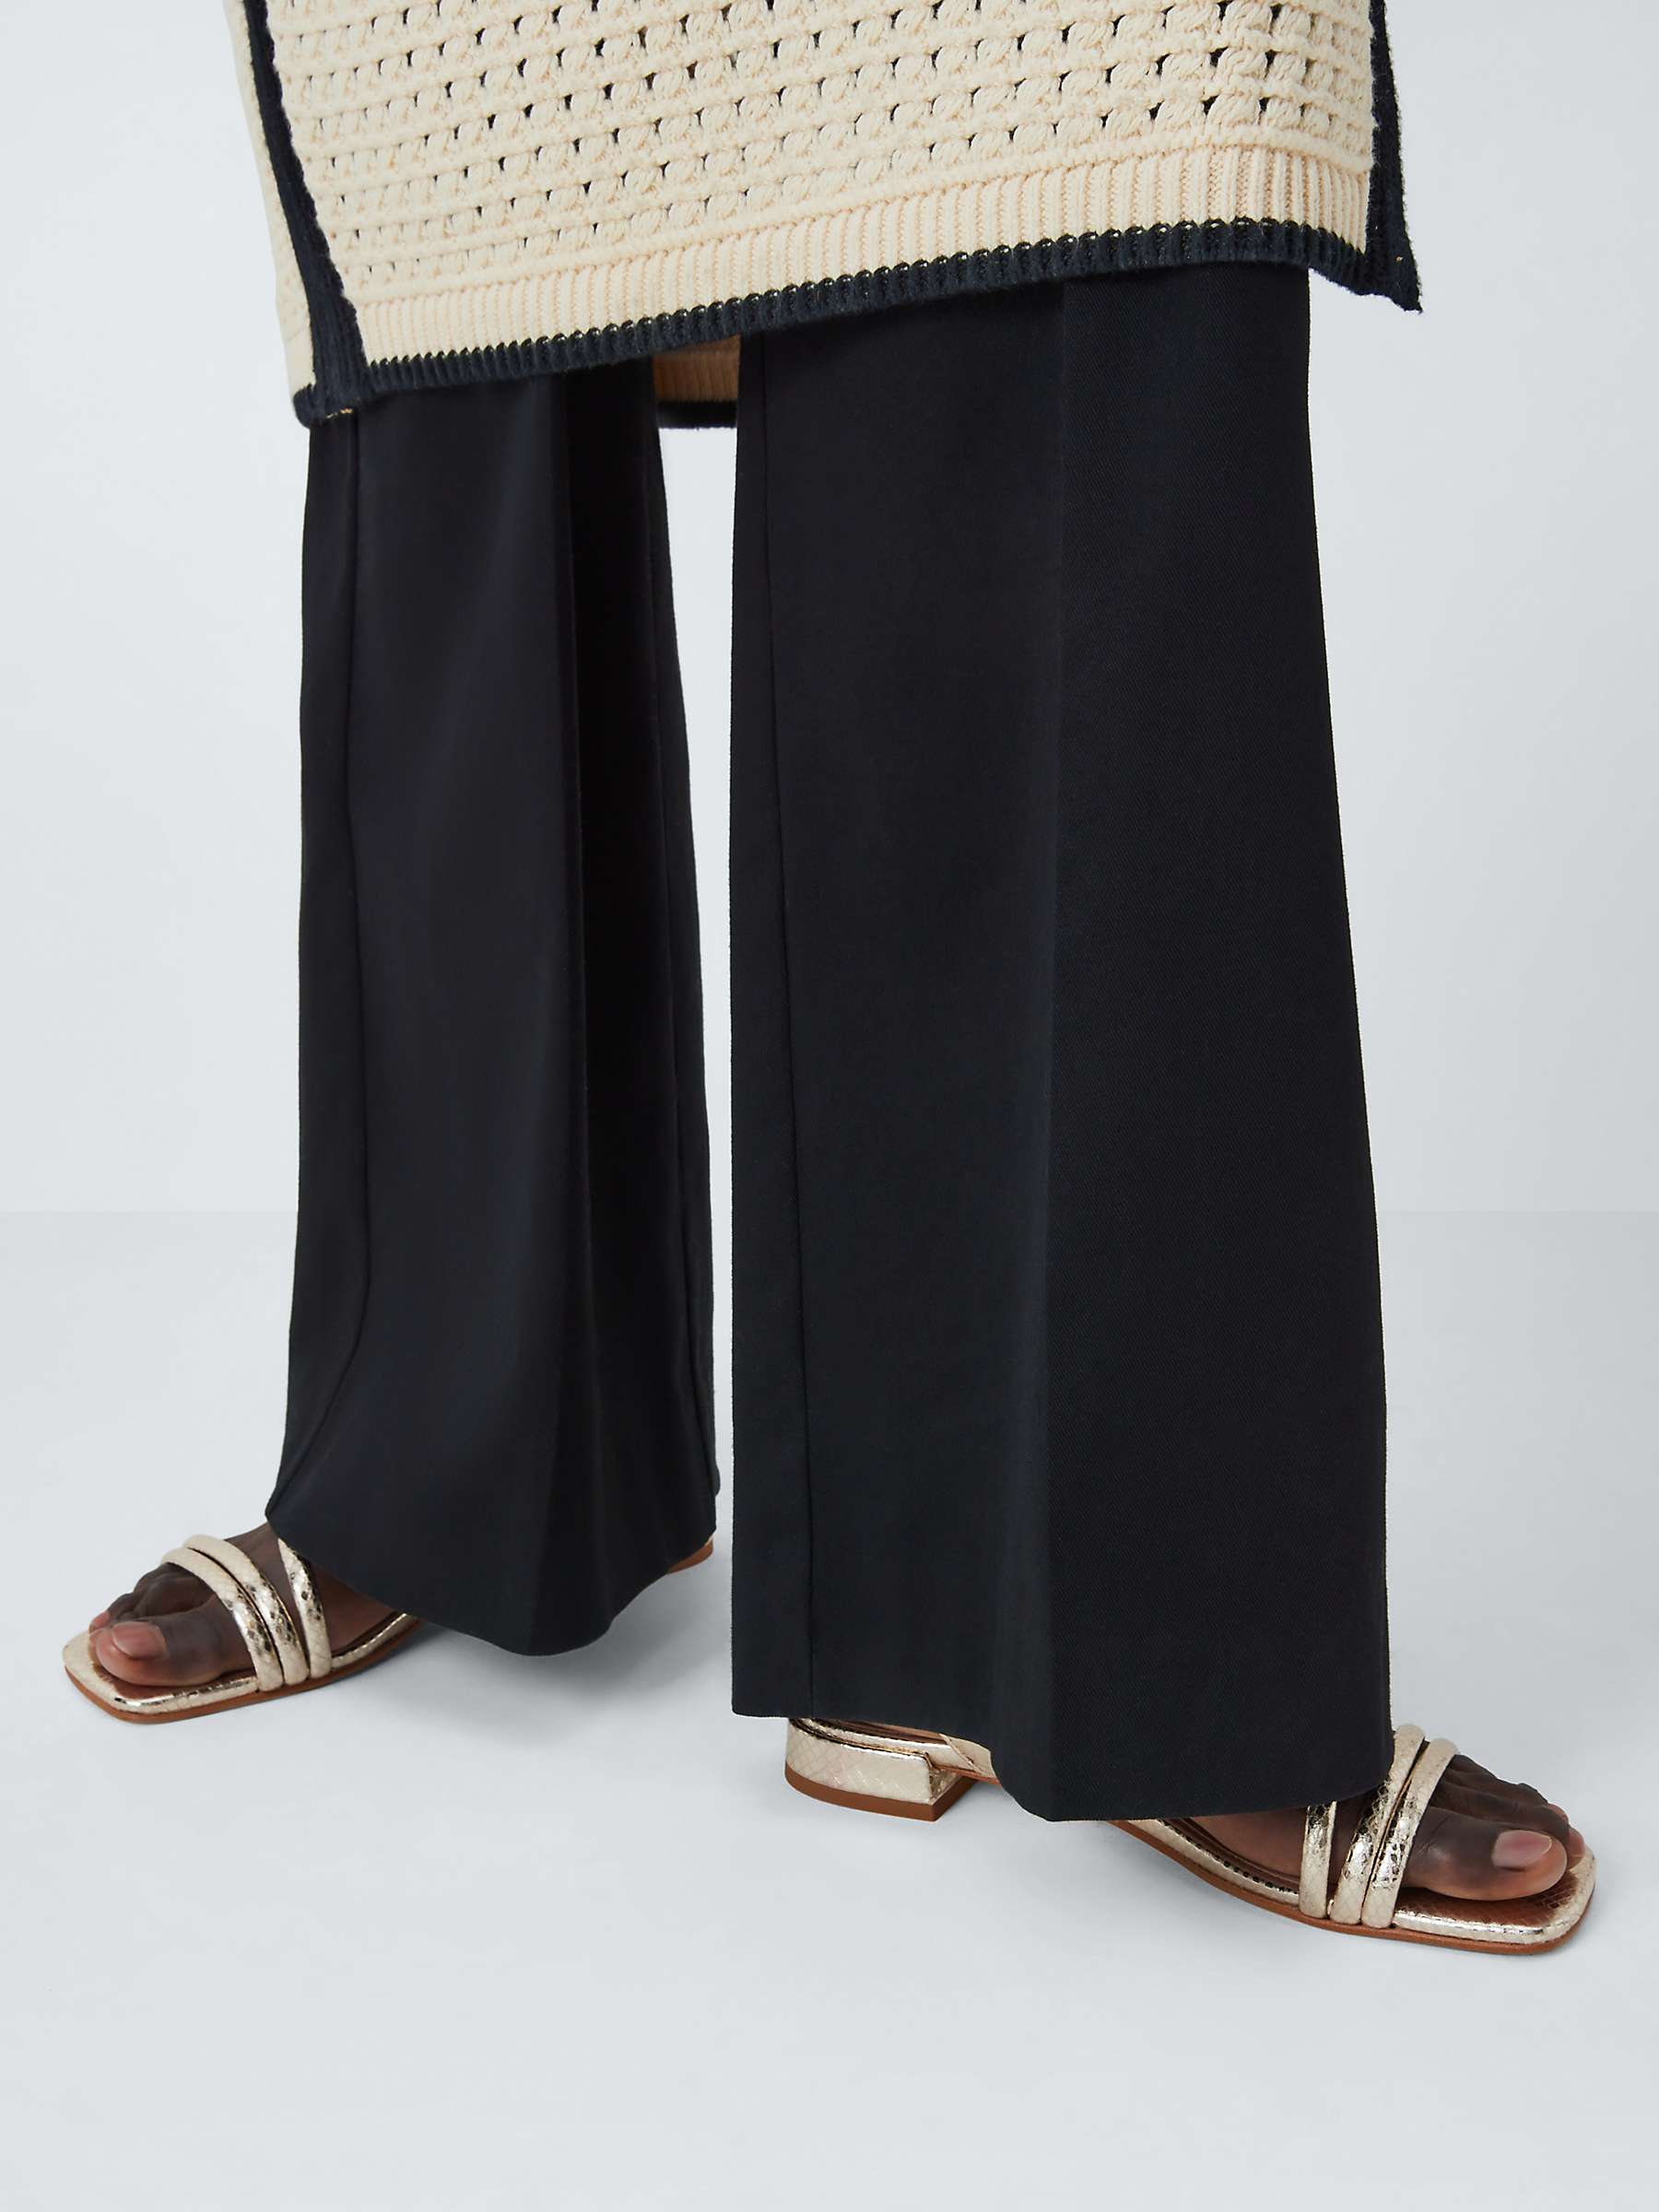 Buy John Lewis Lisbeth Leather Asymmetric Strap Dressy Flat Sandals, Gold Online at johnlewis.com